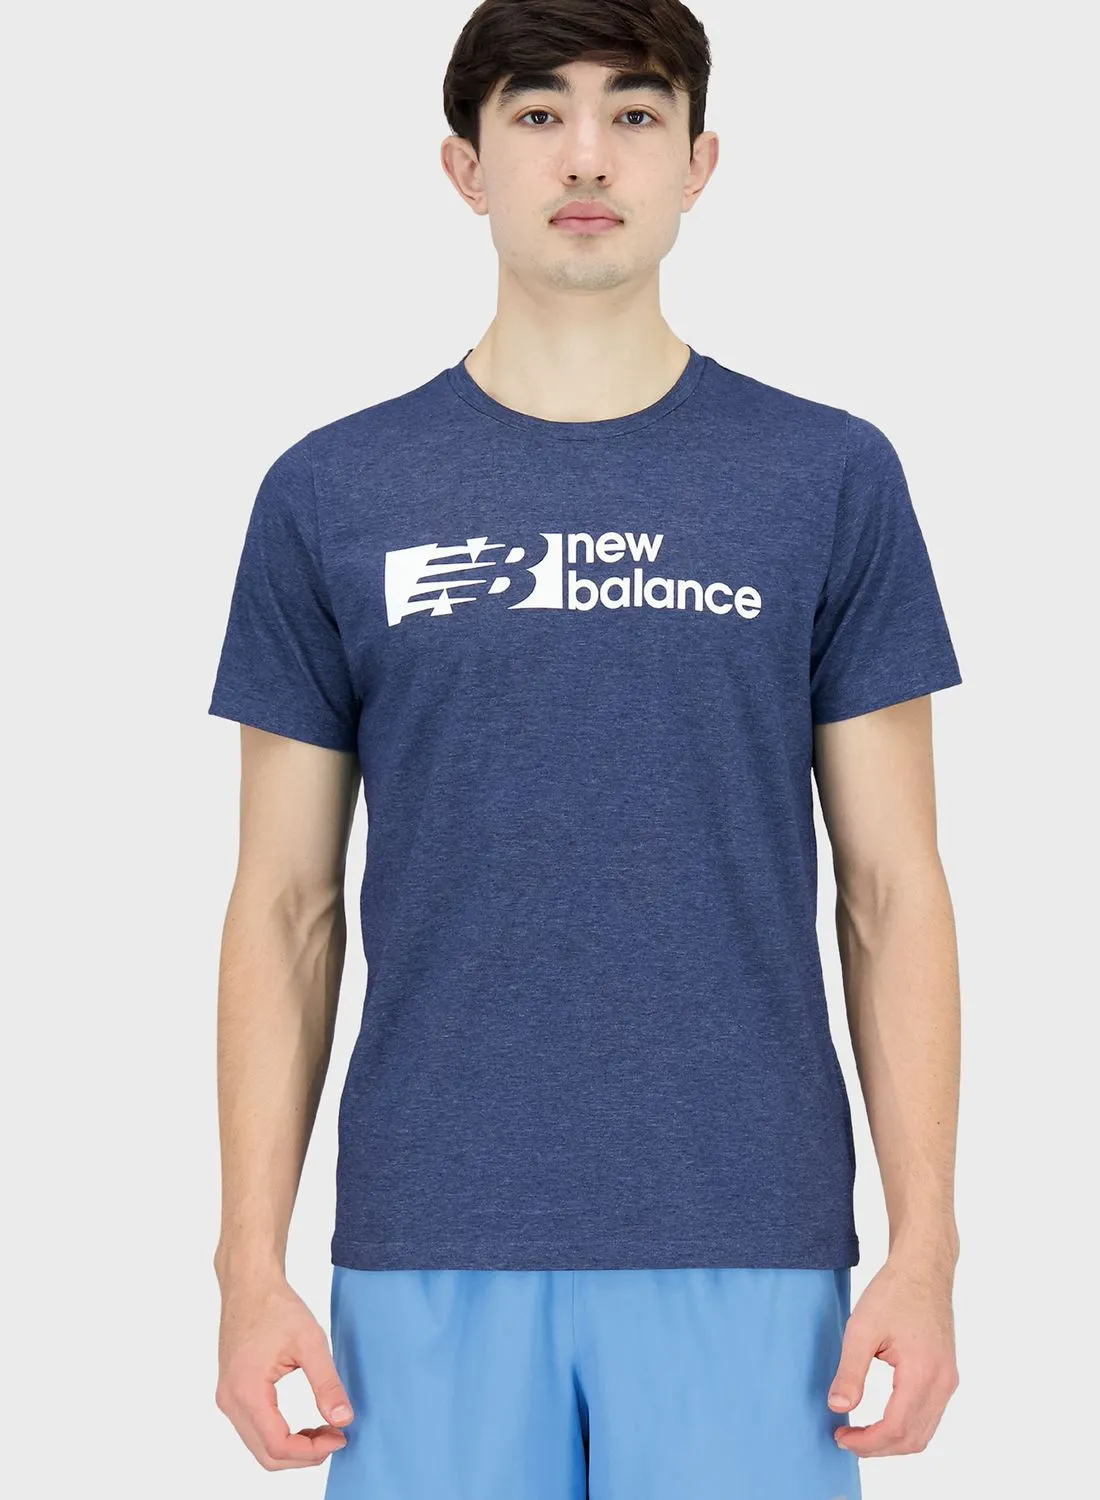 New Balance Heathertech Graphic T-Shirt